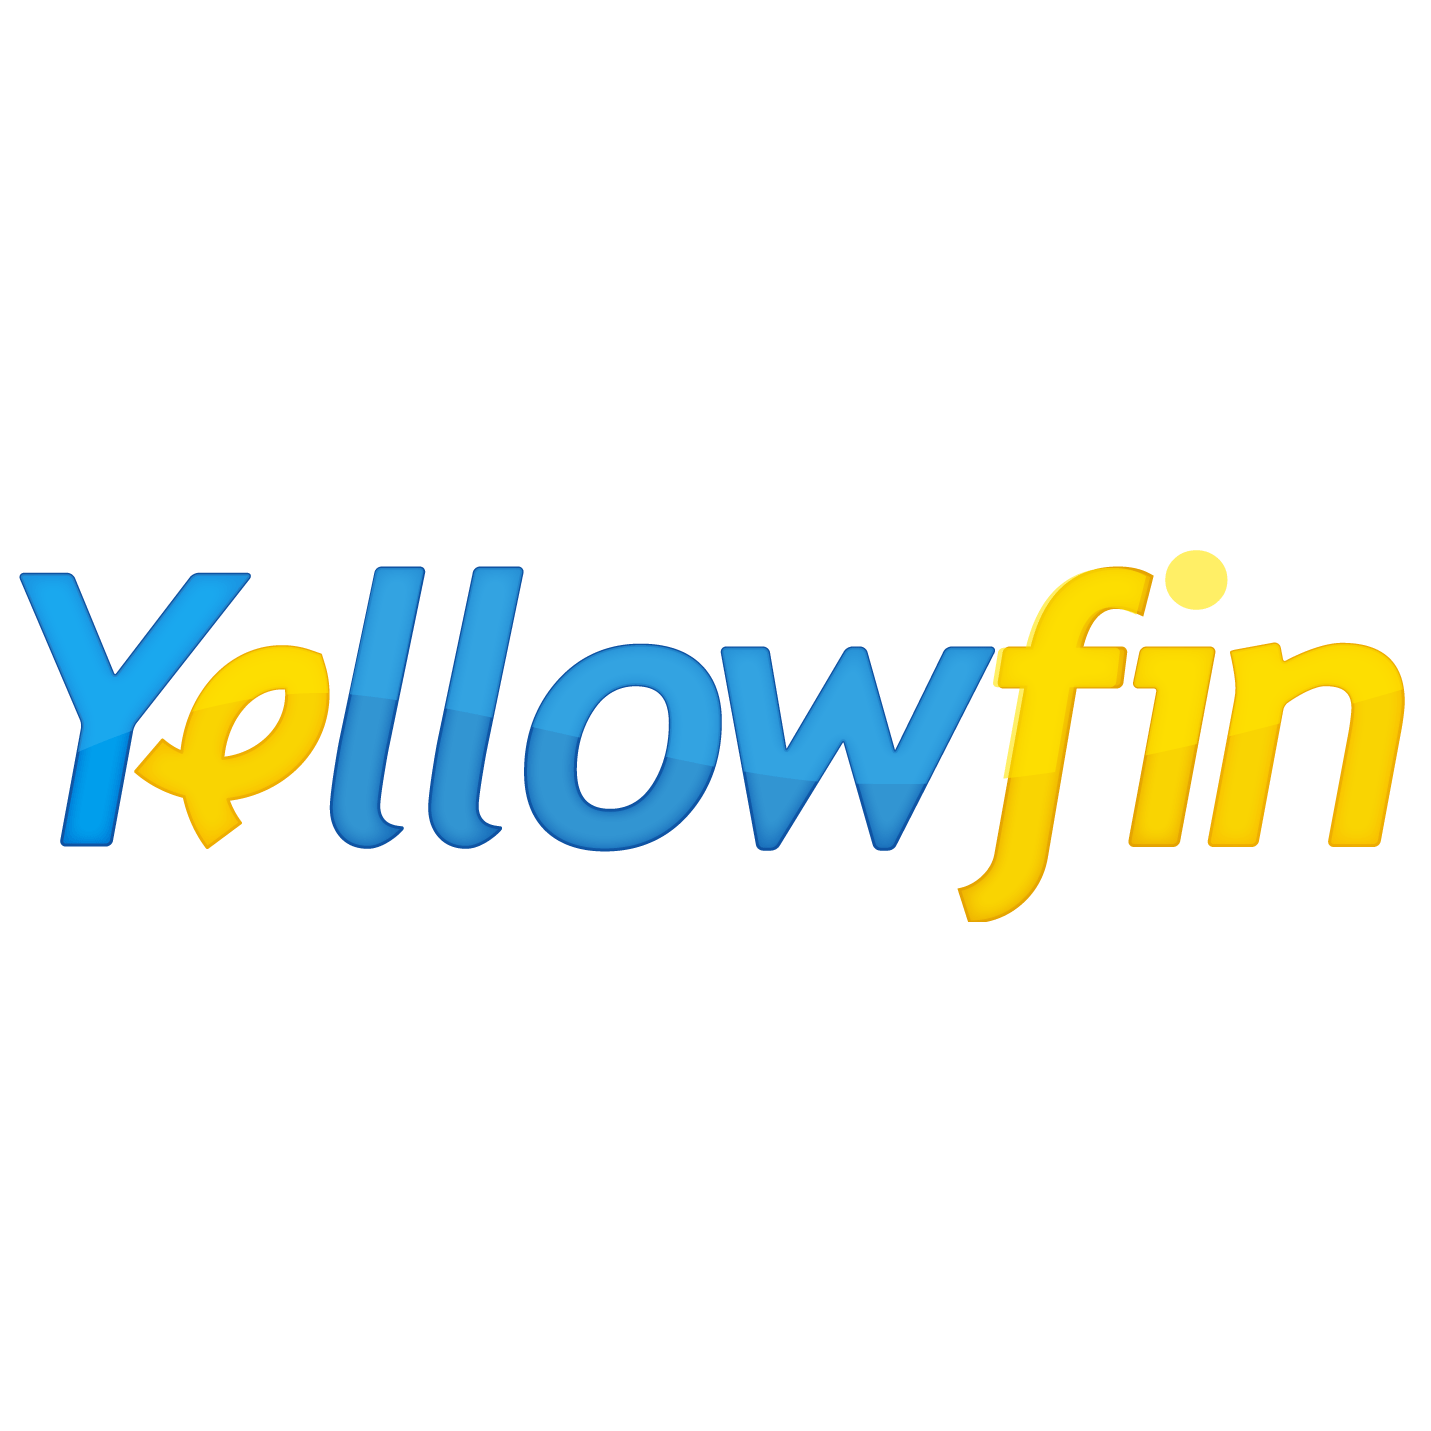 Yellowfin BI - Omnit Solutions